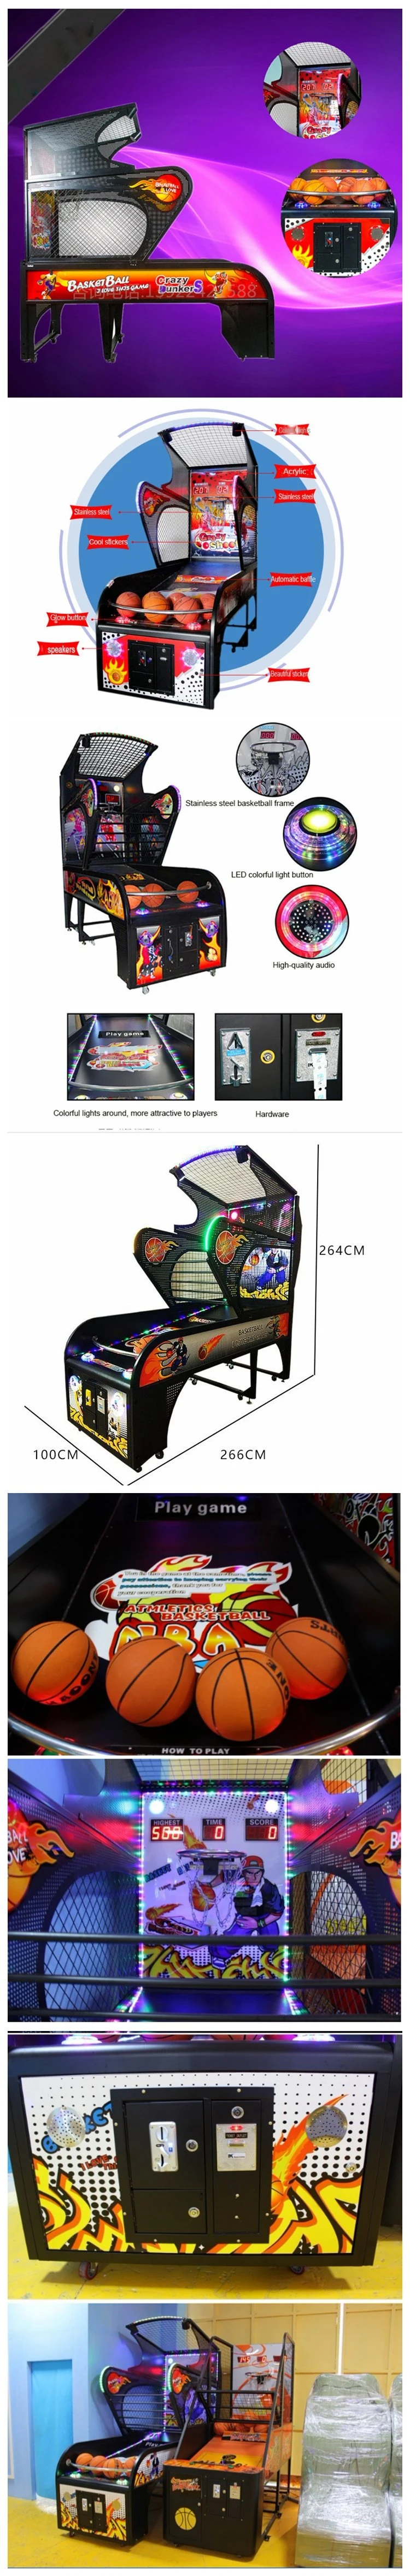 Coin Operated Electronic Street Basketball Machine Arcade Basketball Game Machine